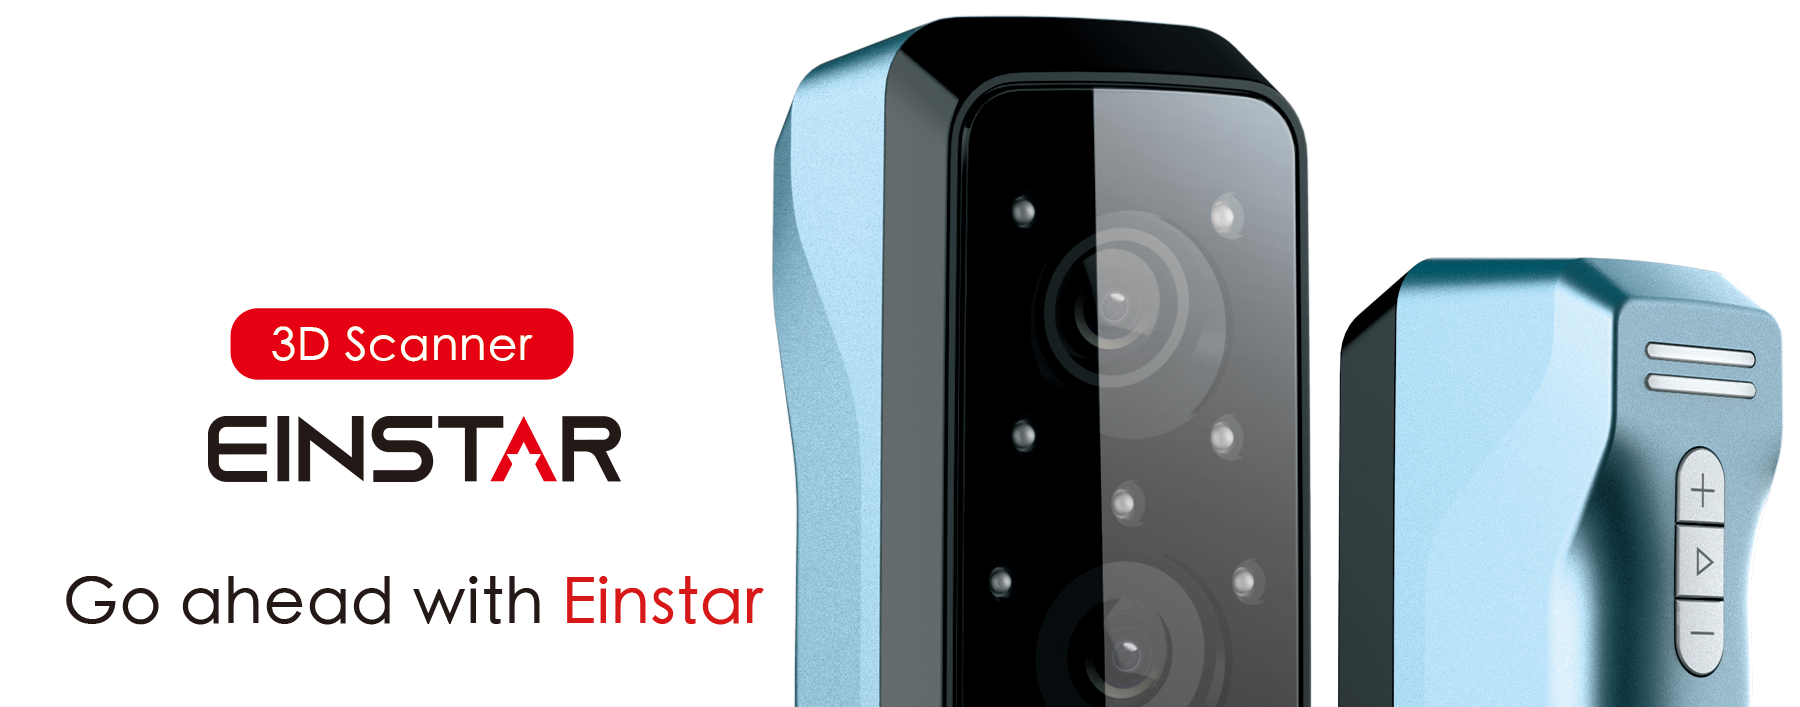 3D Scanner EinStar by Shining 3D